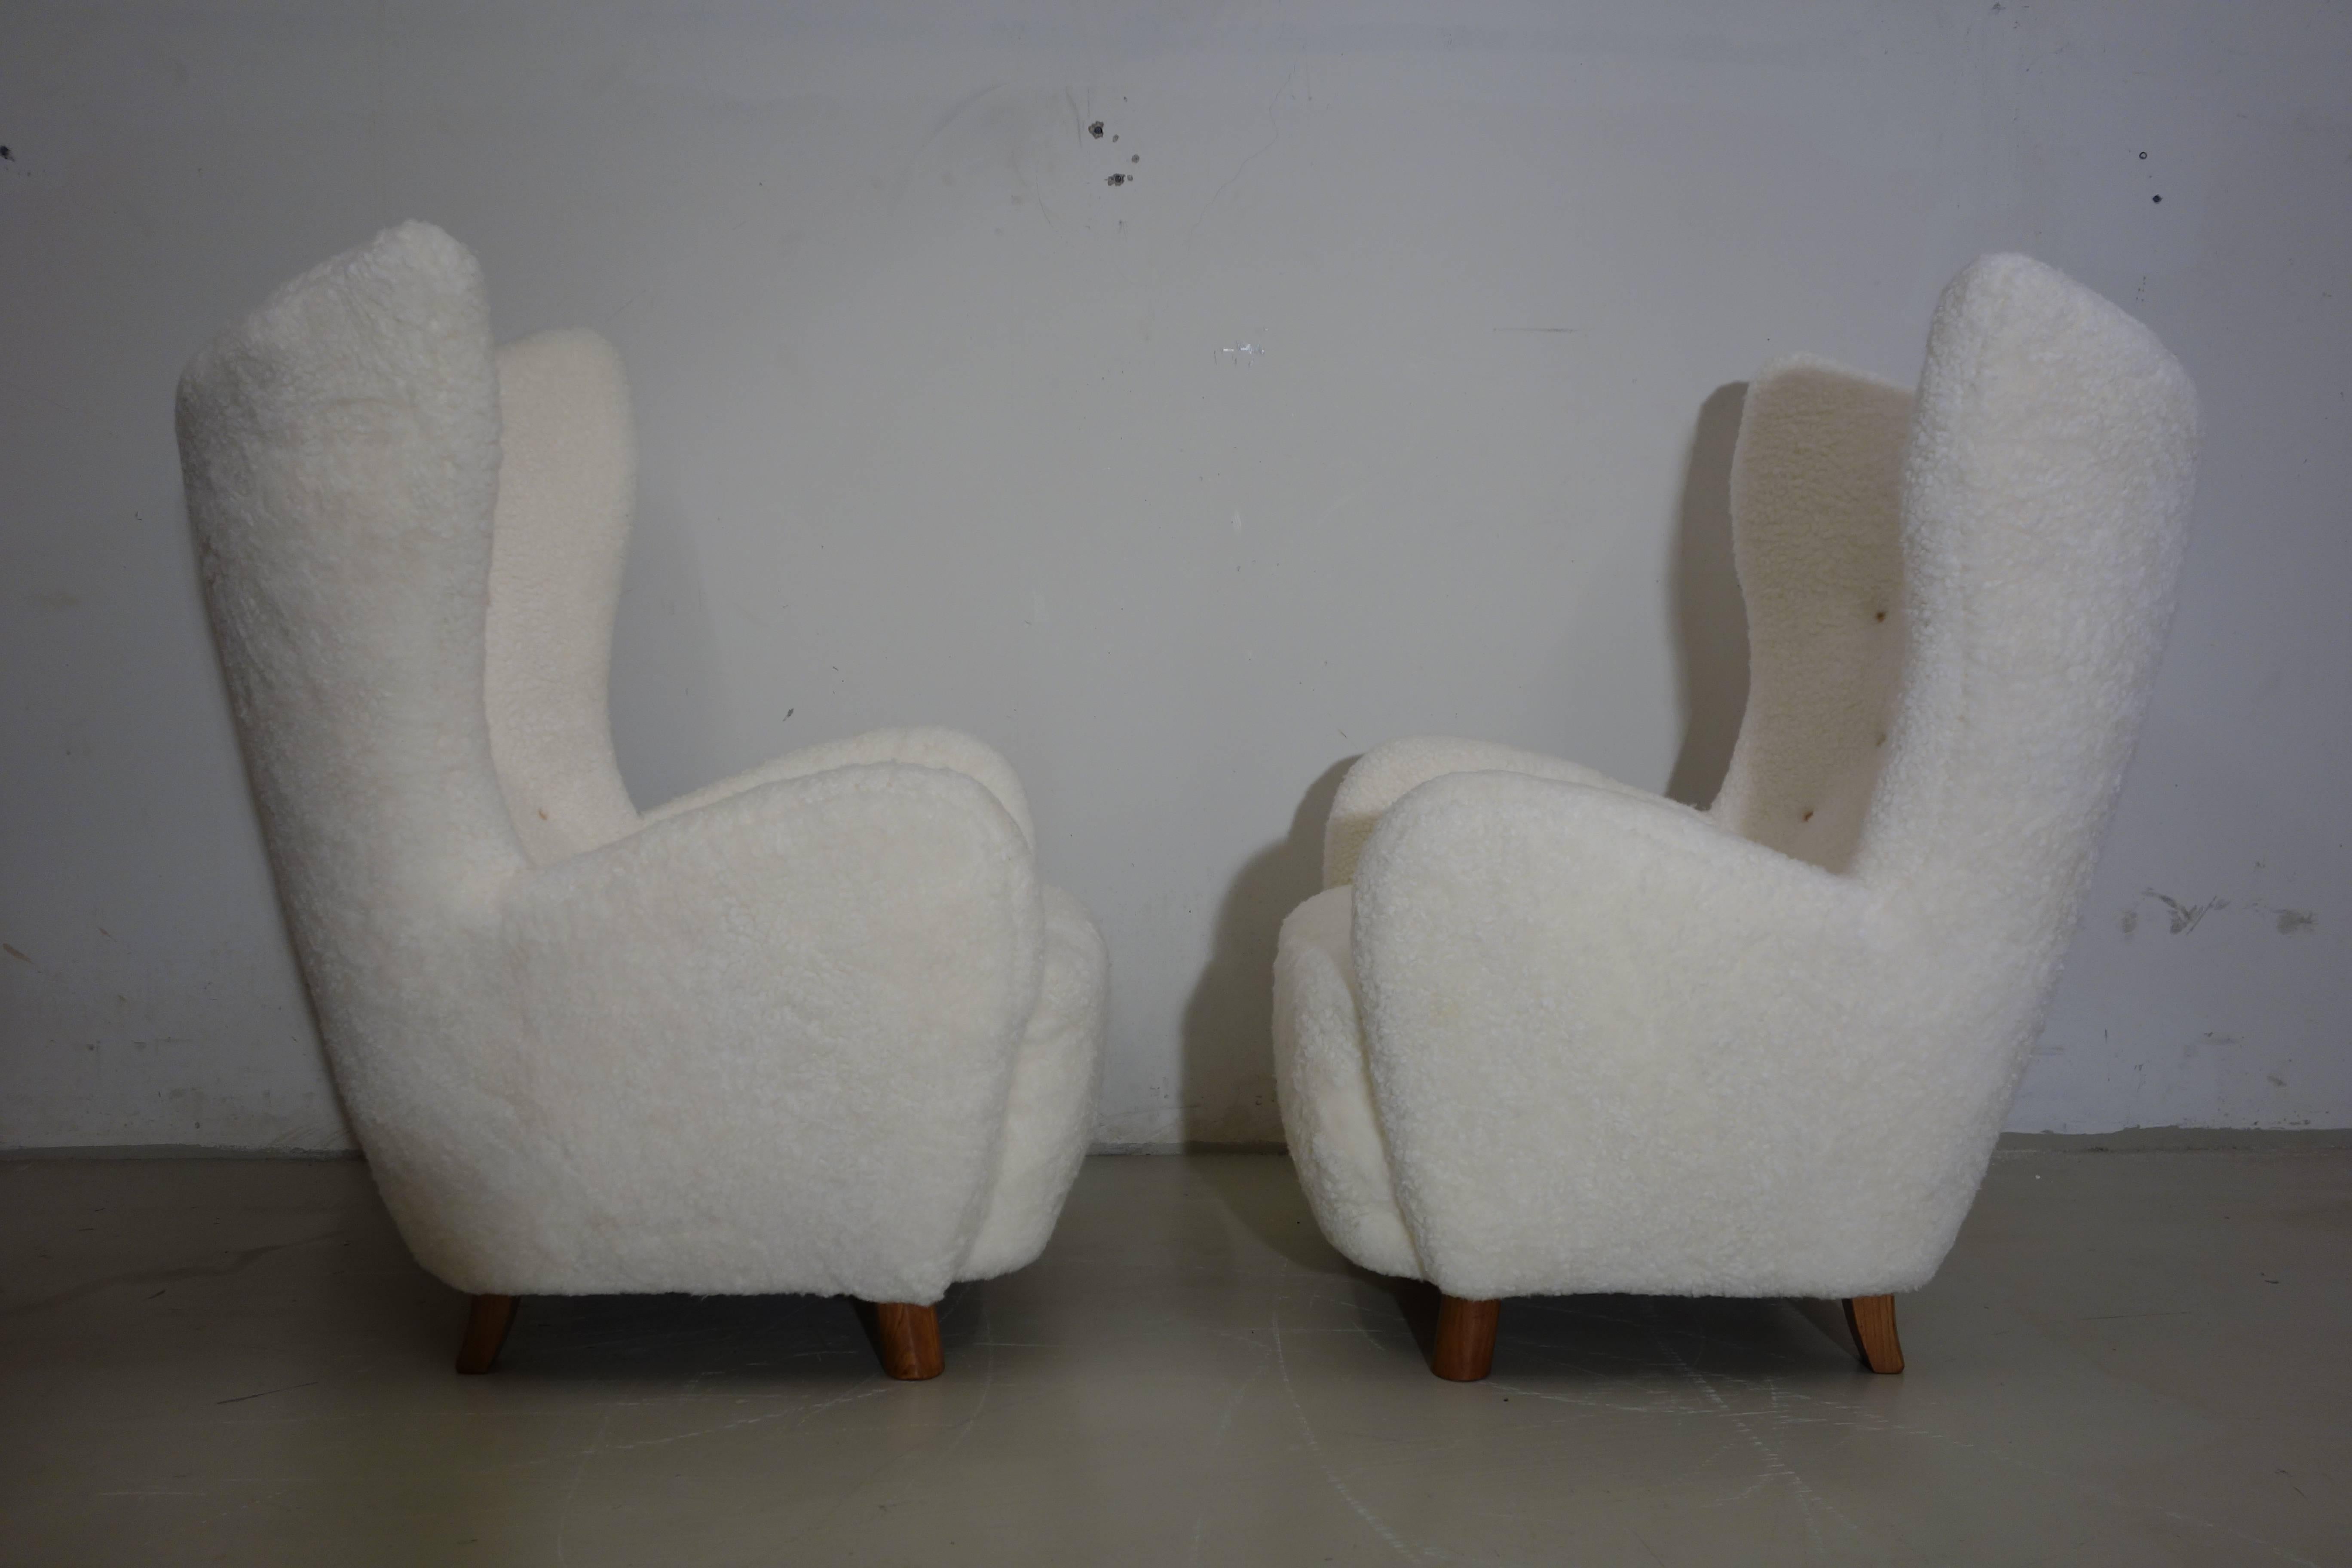 Pair of Mogens Lassen easy chairs in sheepskin, legs of beech, 1940s.

Price is for the pair.

Lliterature: Dansk Boligkunst 1947, Vol. II, Bernadotte & Lehm-Laurson, pg. 212.